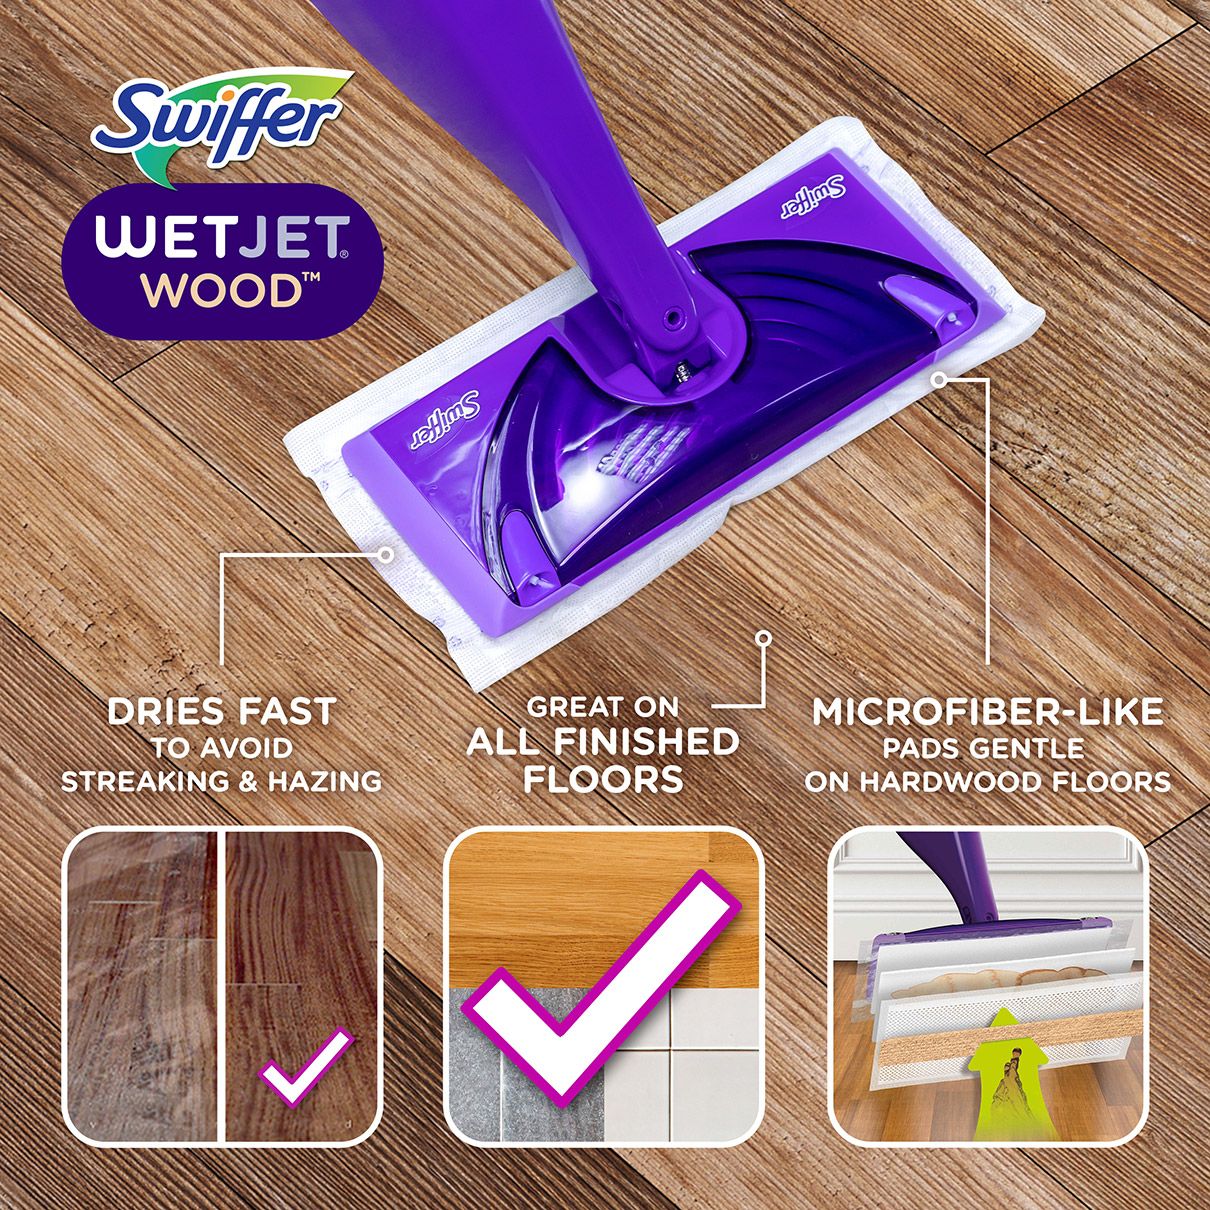 Swiffer Wet Lingettes nettoyantes, recharge, contenu: 12